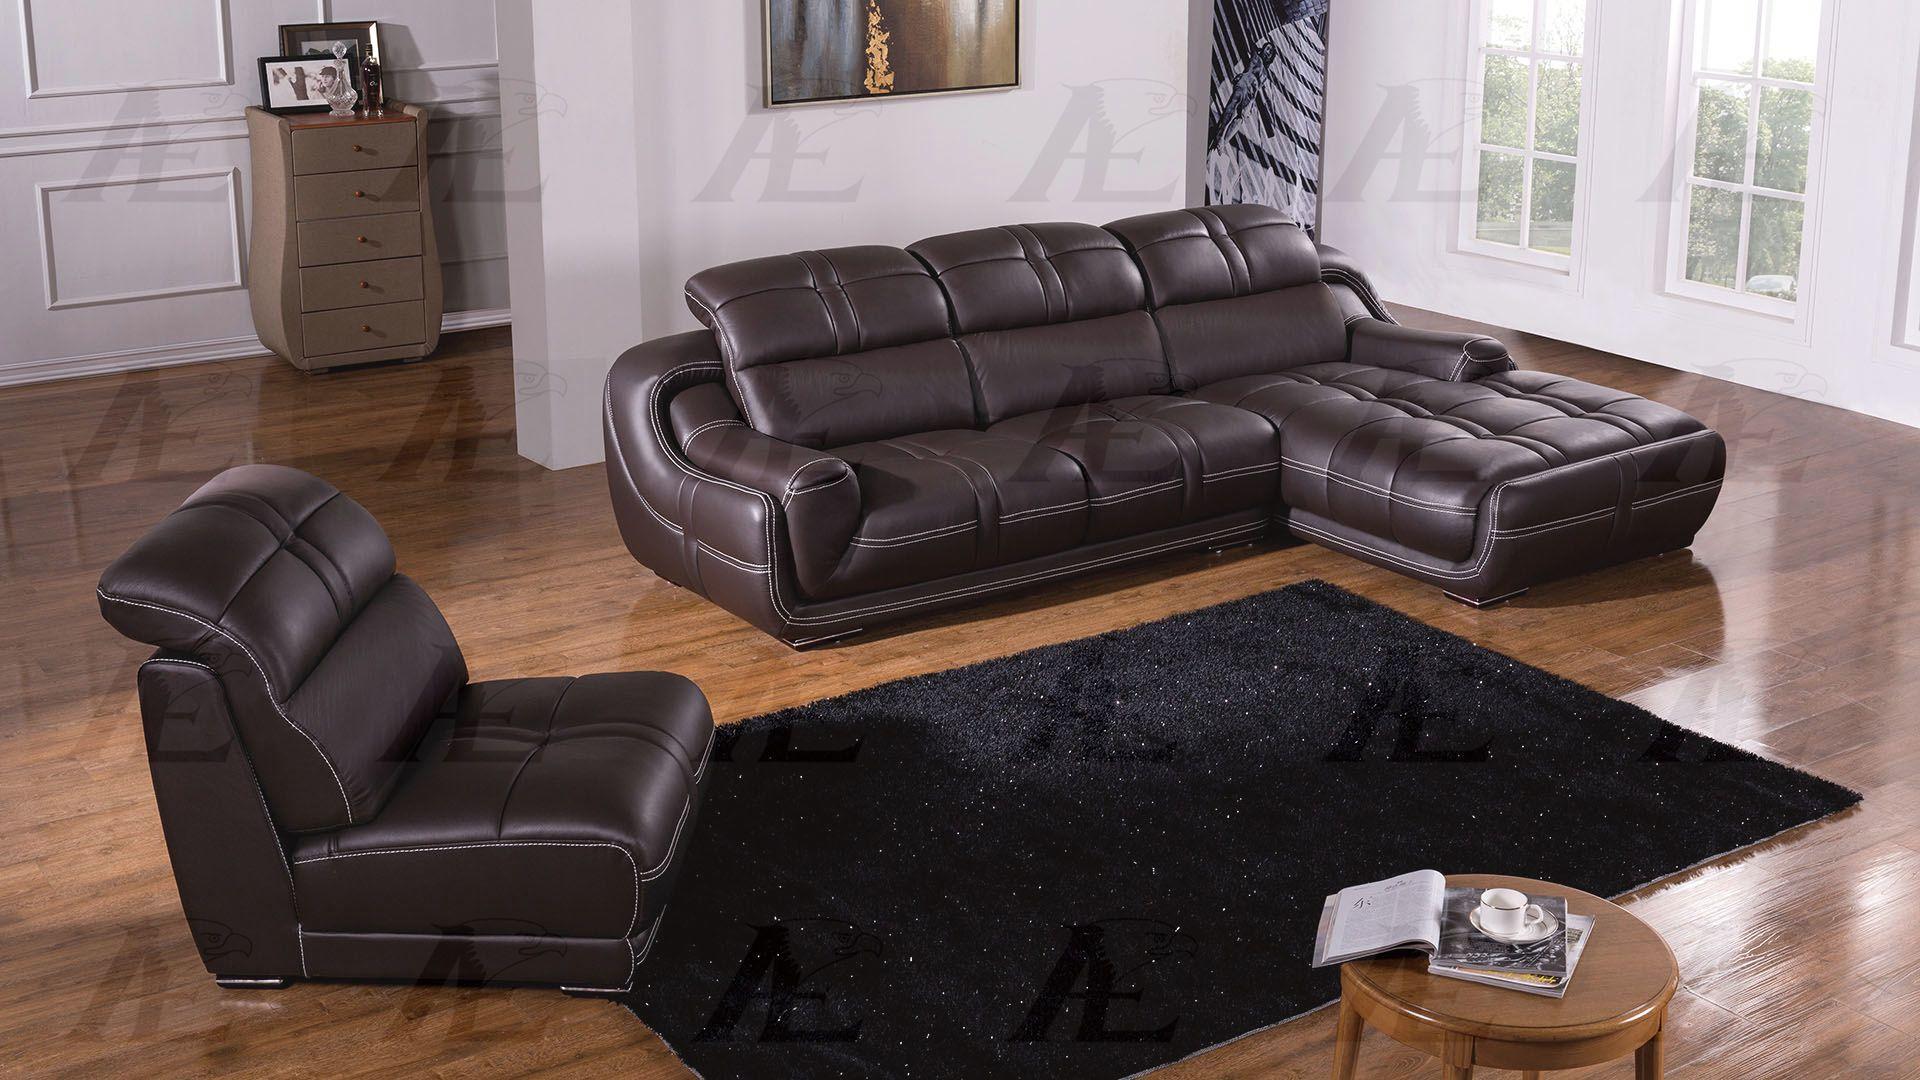 

    
EK-L201R-DB American Eagle Furniture Sectional Sofa
